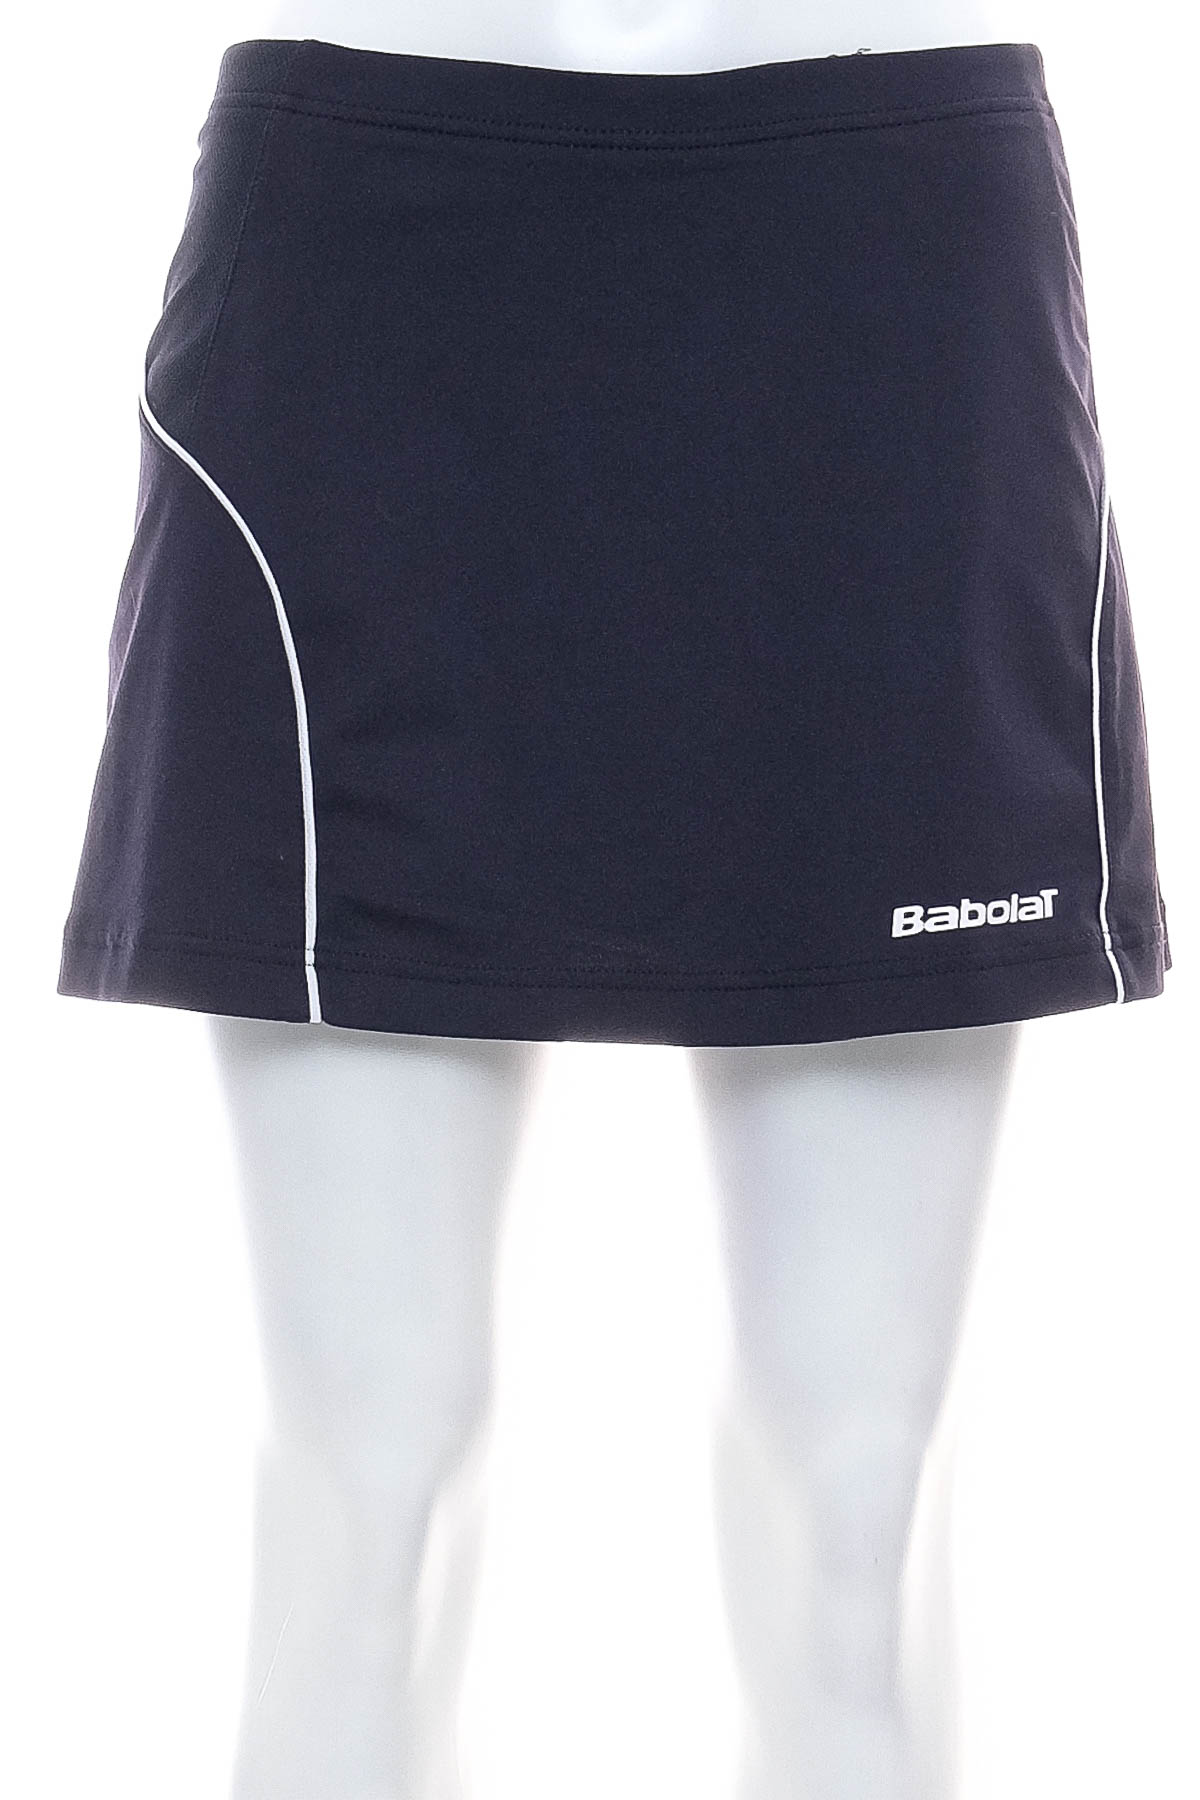 Skirt - pants - Babolat - 0